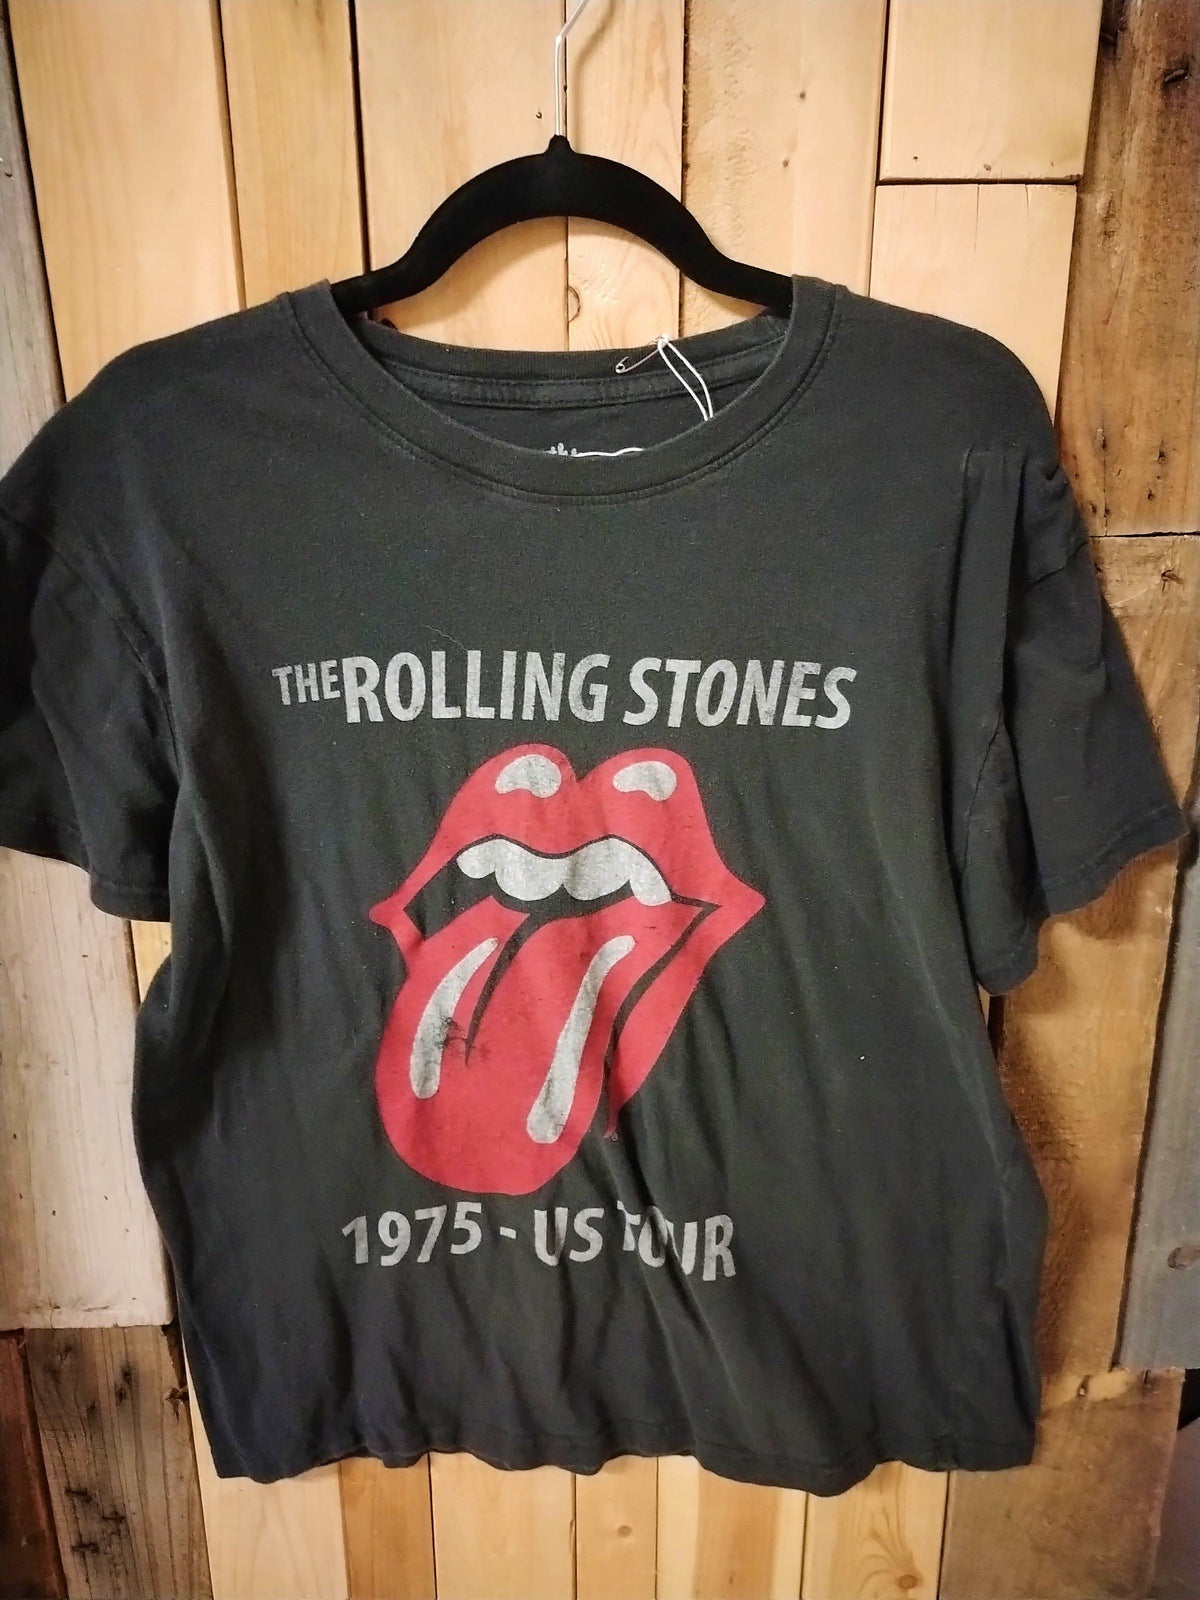 The Rolling Stones Official Merchandise "1975 US Tour" Reproduction T Shirt Size Large